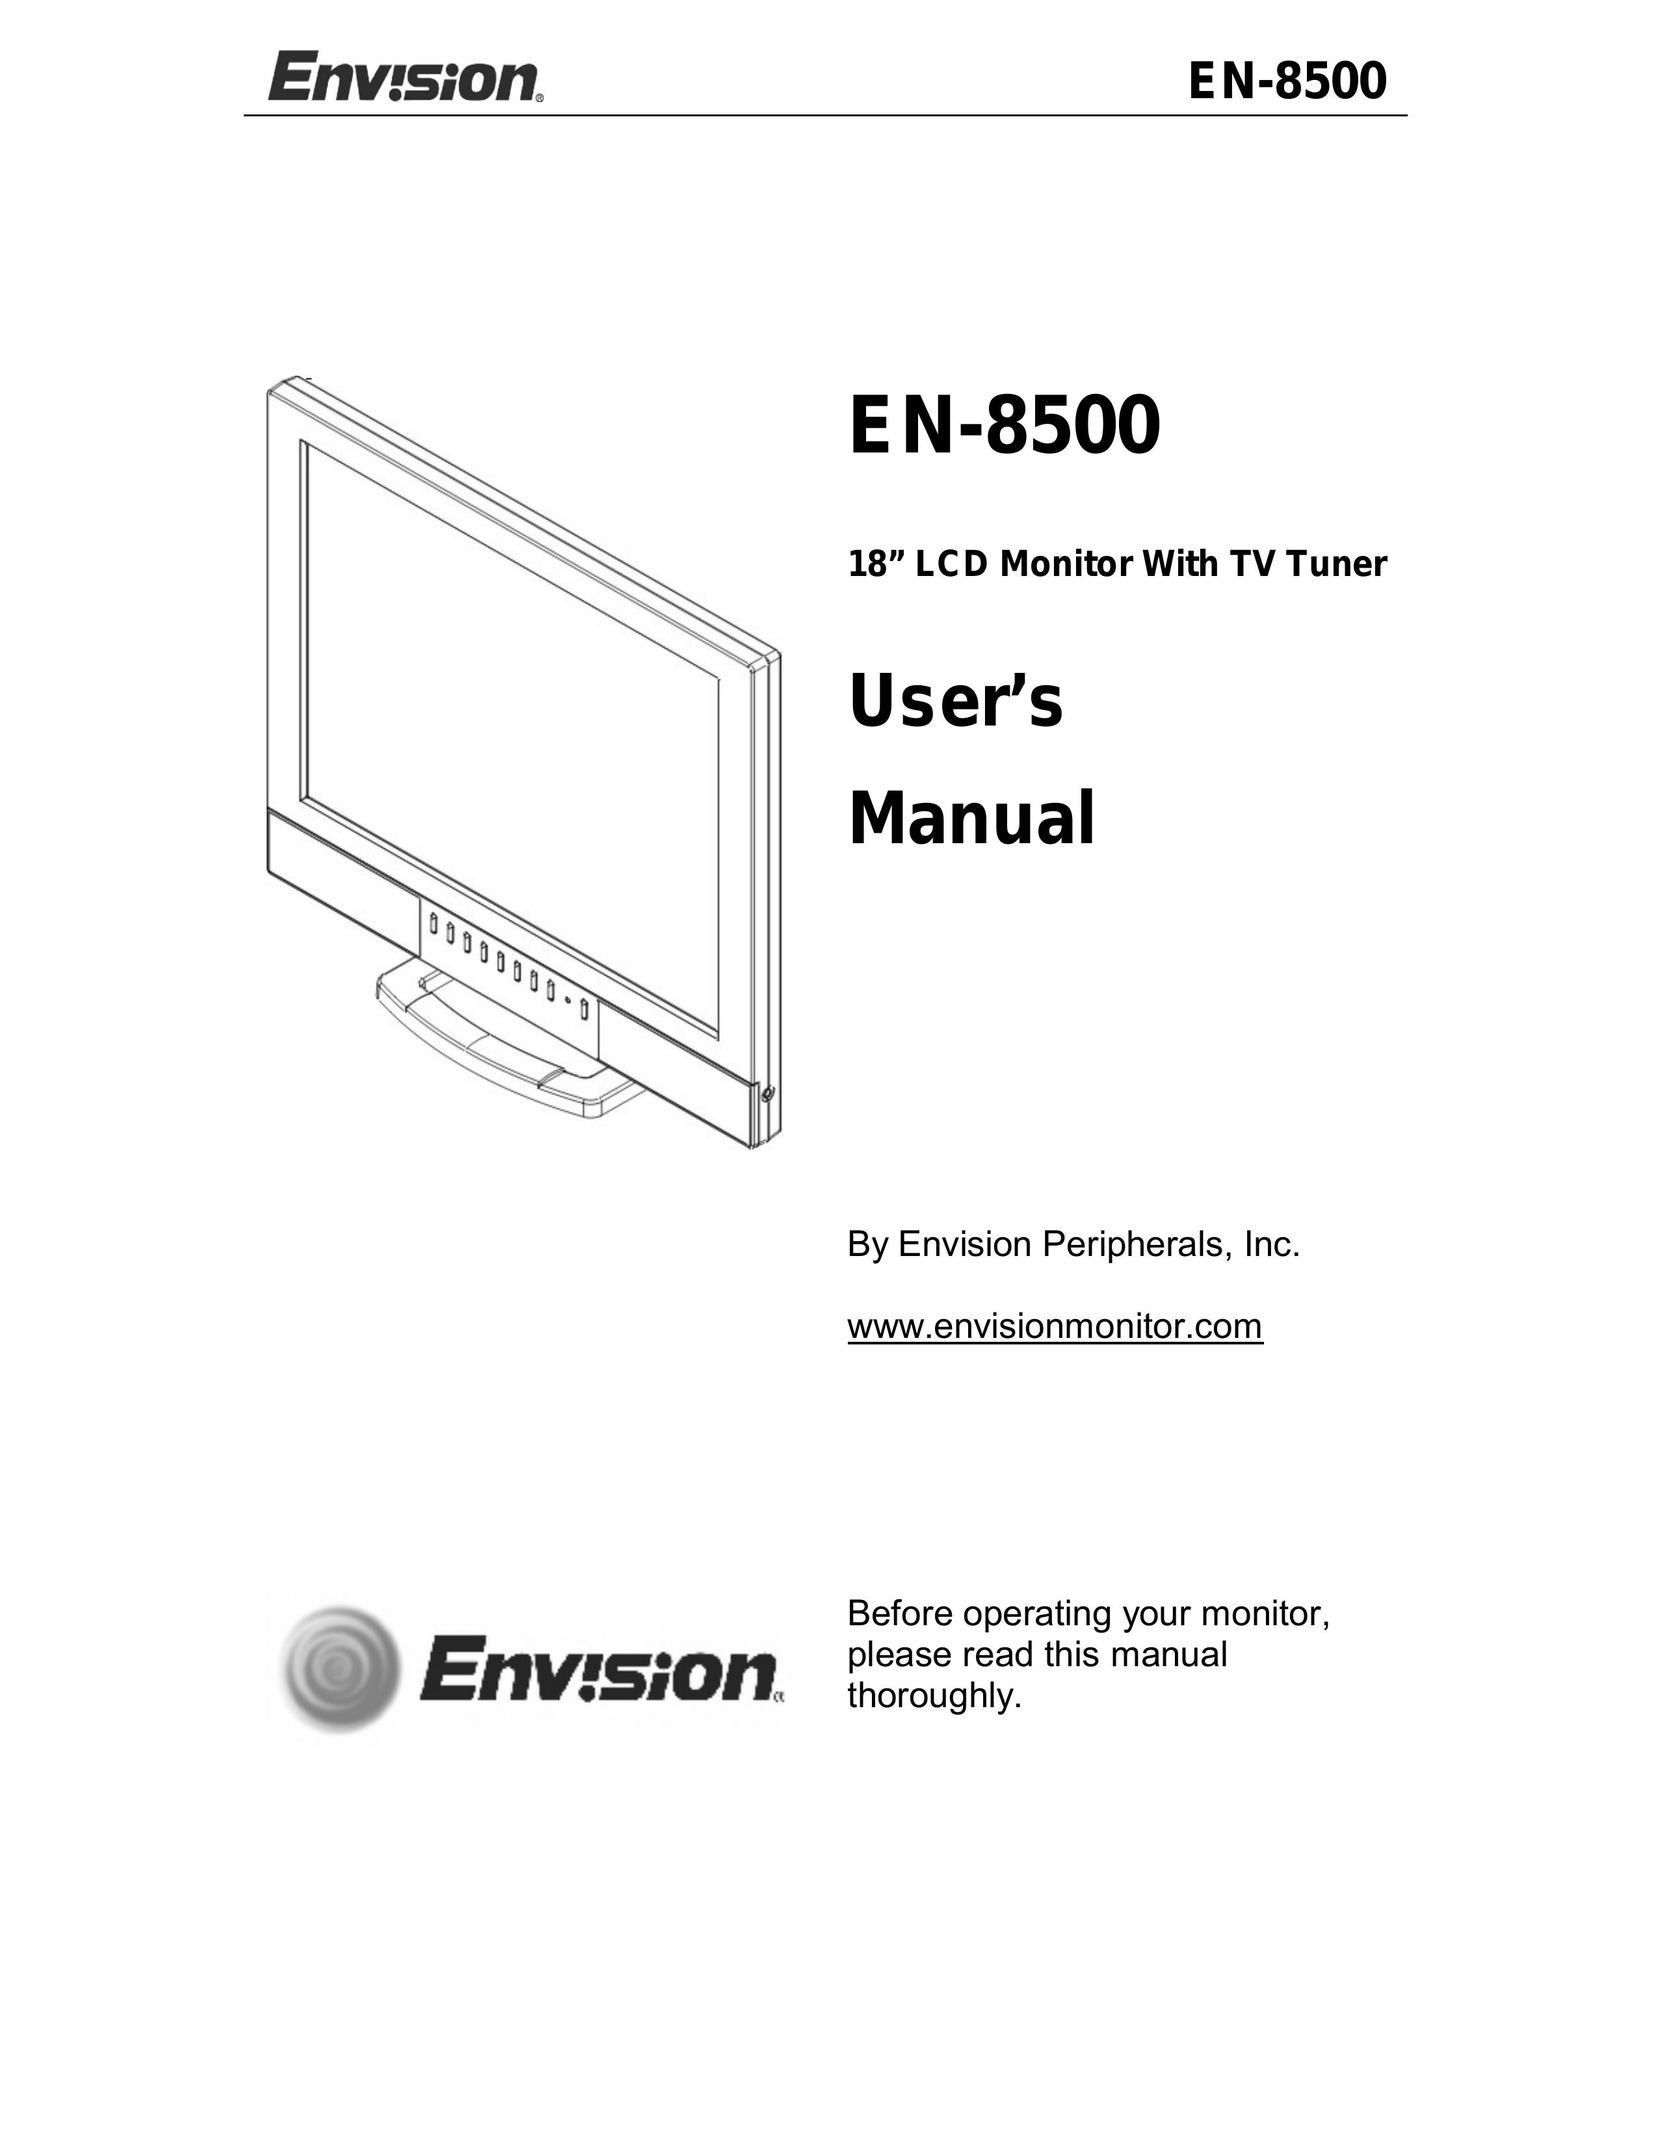 Envision Peripherals EN-8500 Computer Monitor User Manual